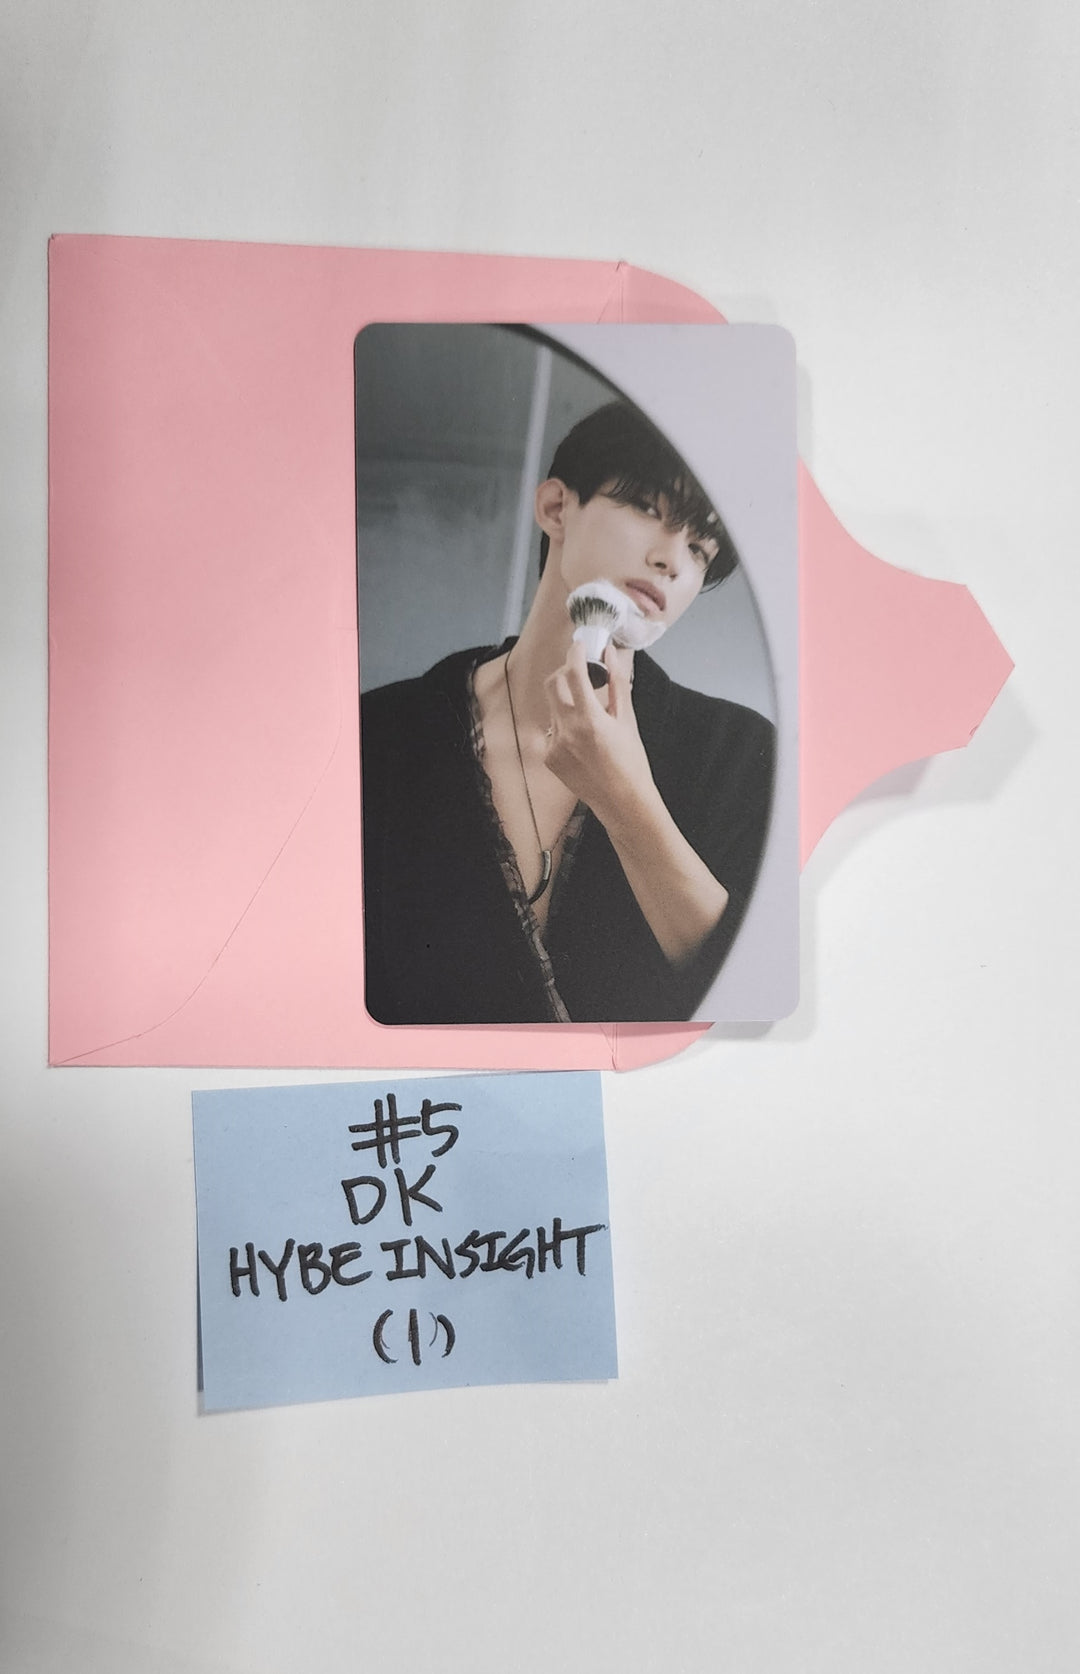 Seventeen - HYBE INSIGHT Event Photocard (2)